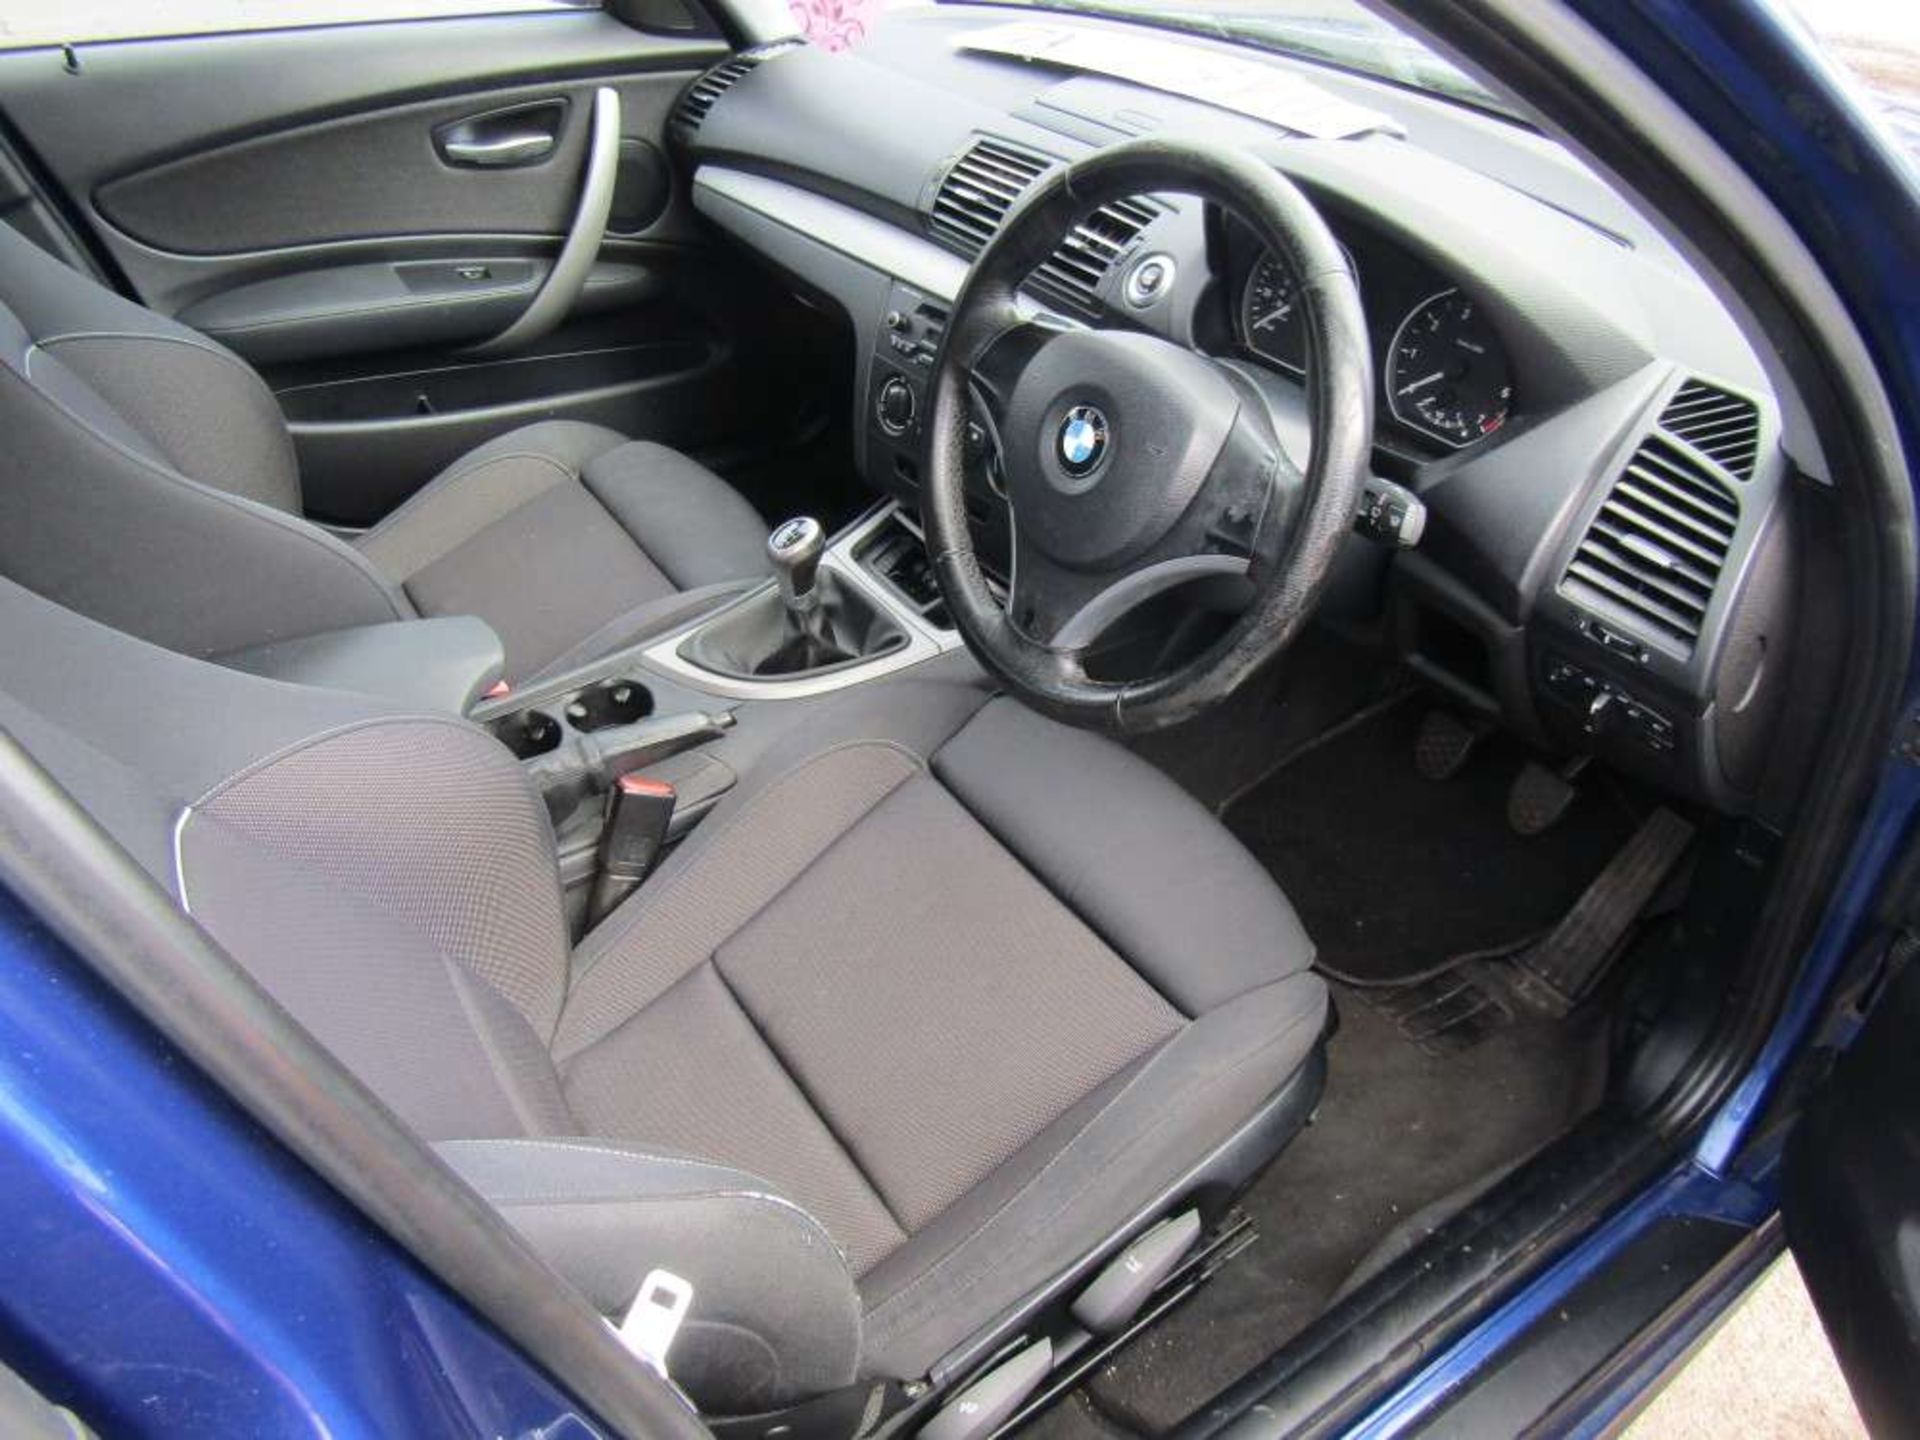 2008 57 reg BMW 116i ES - Image 5 of 6